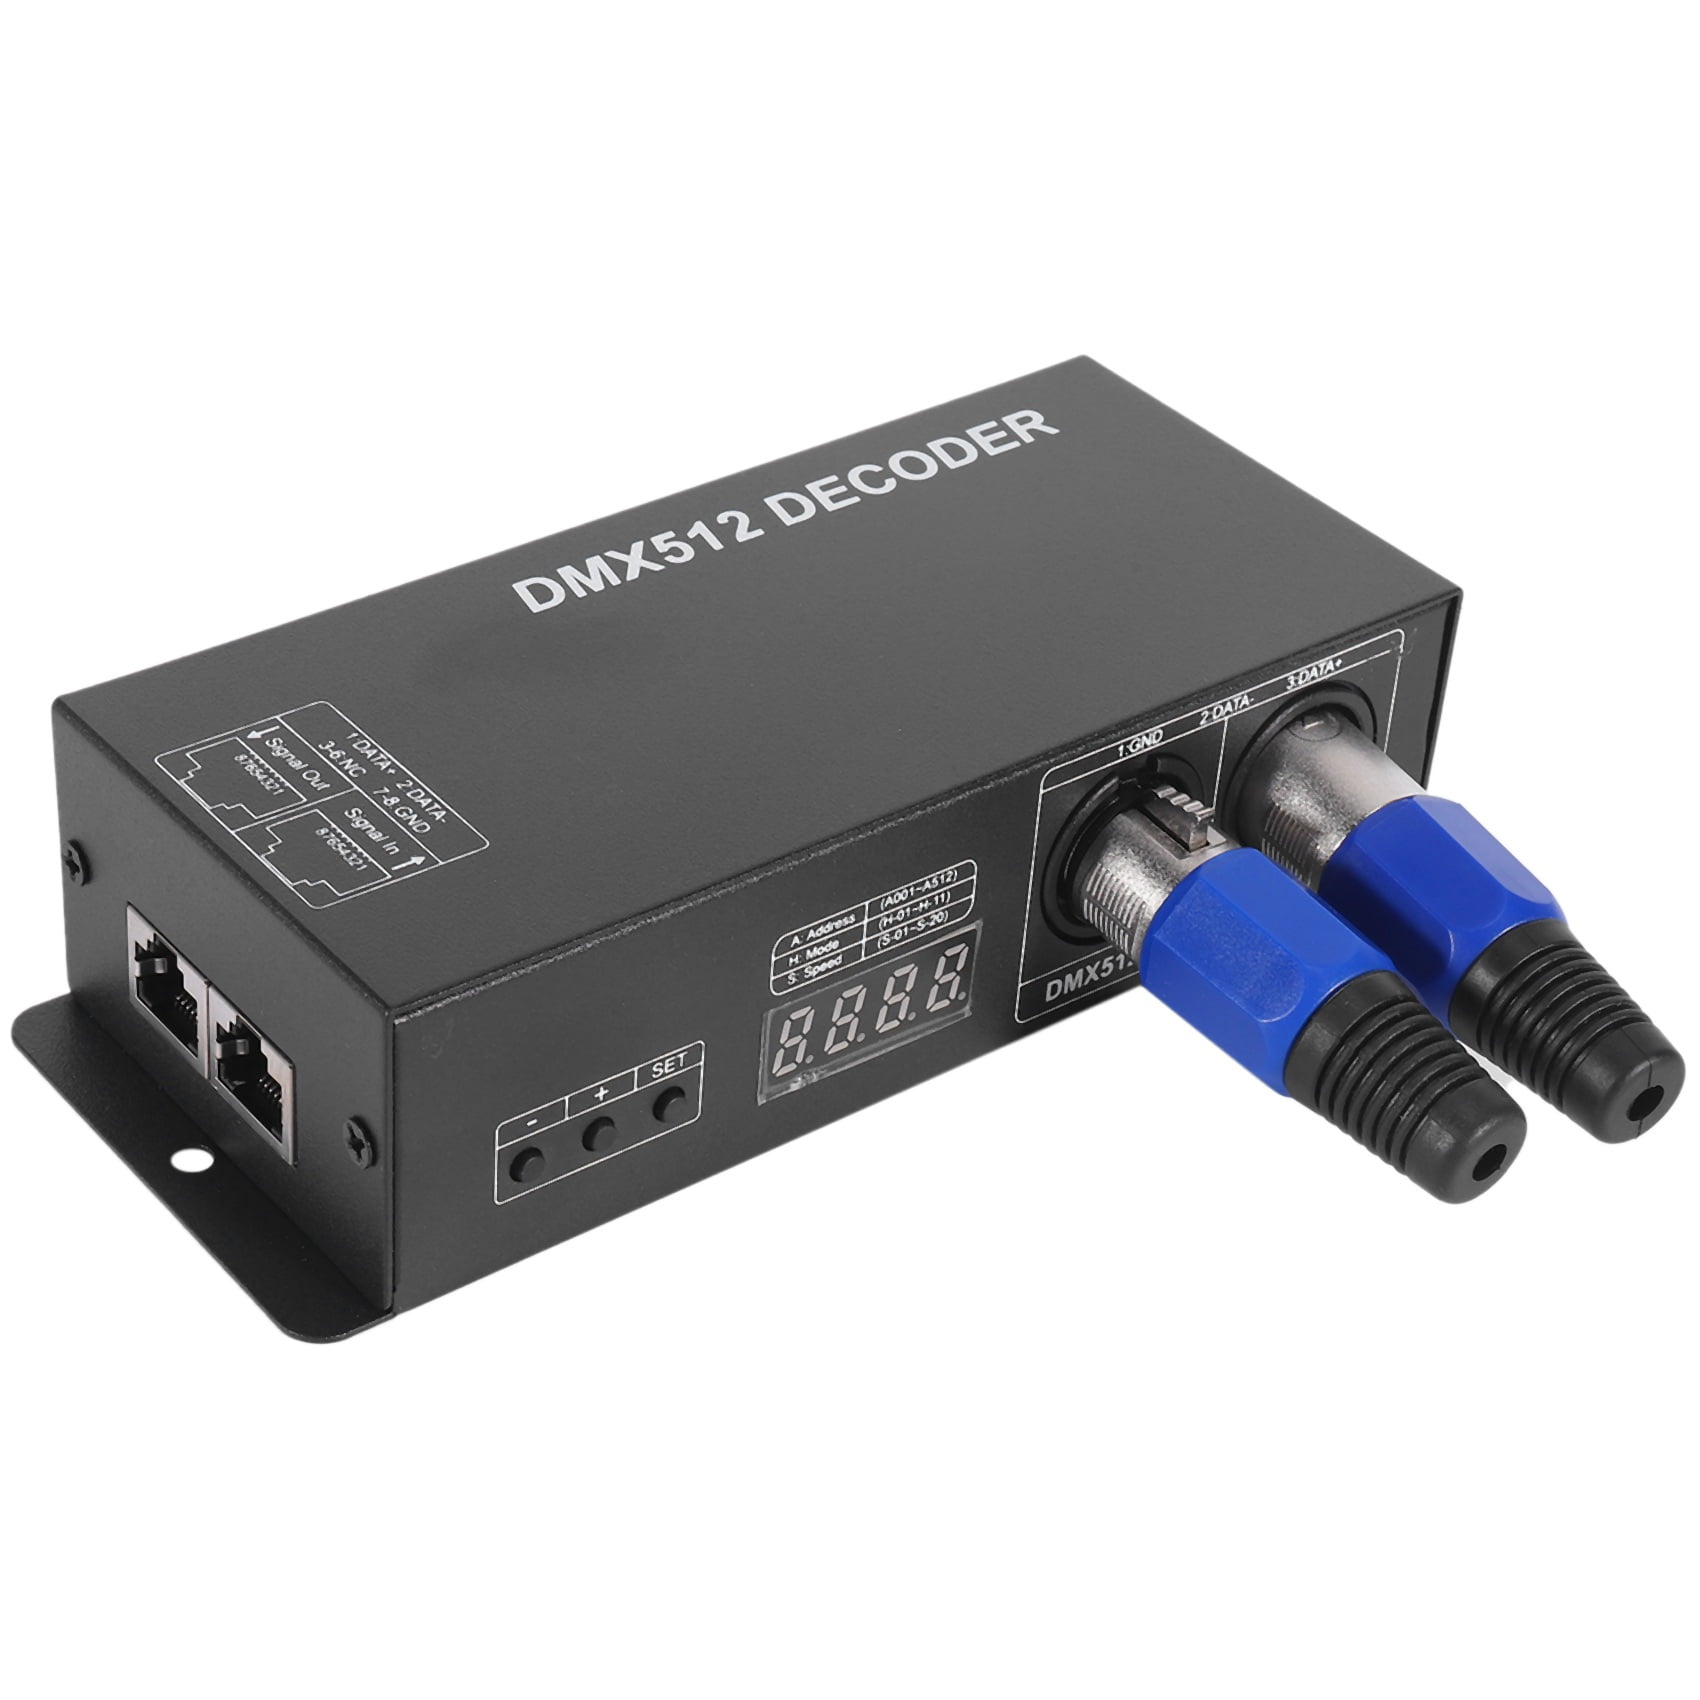 ambulance stap in Geruïneerd Dmx 512 Digital Display Decoder,Dimming Driver Dmx512 Controller For Led  Rgbw Tape Strip Light Rj45 Connection Dc12-24V 20A (4 Channel) - Walmart.com